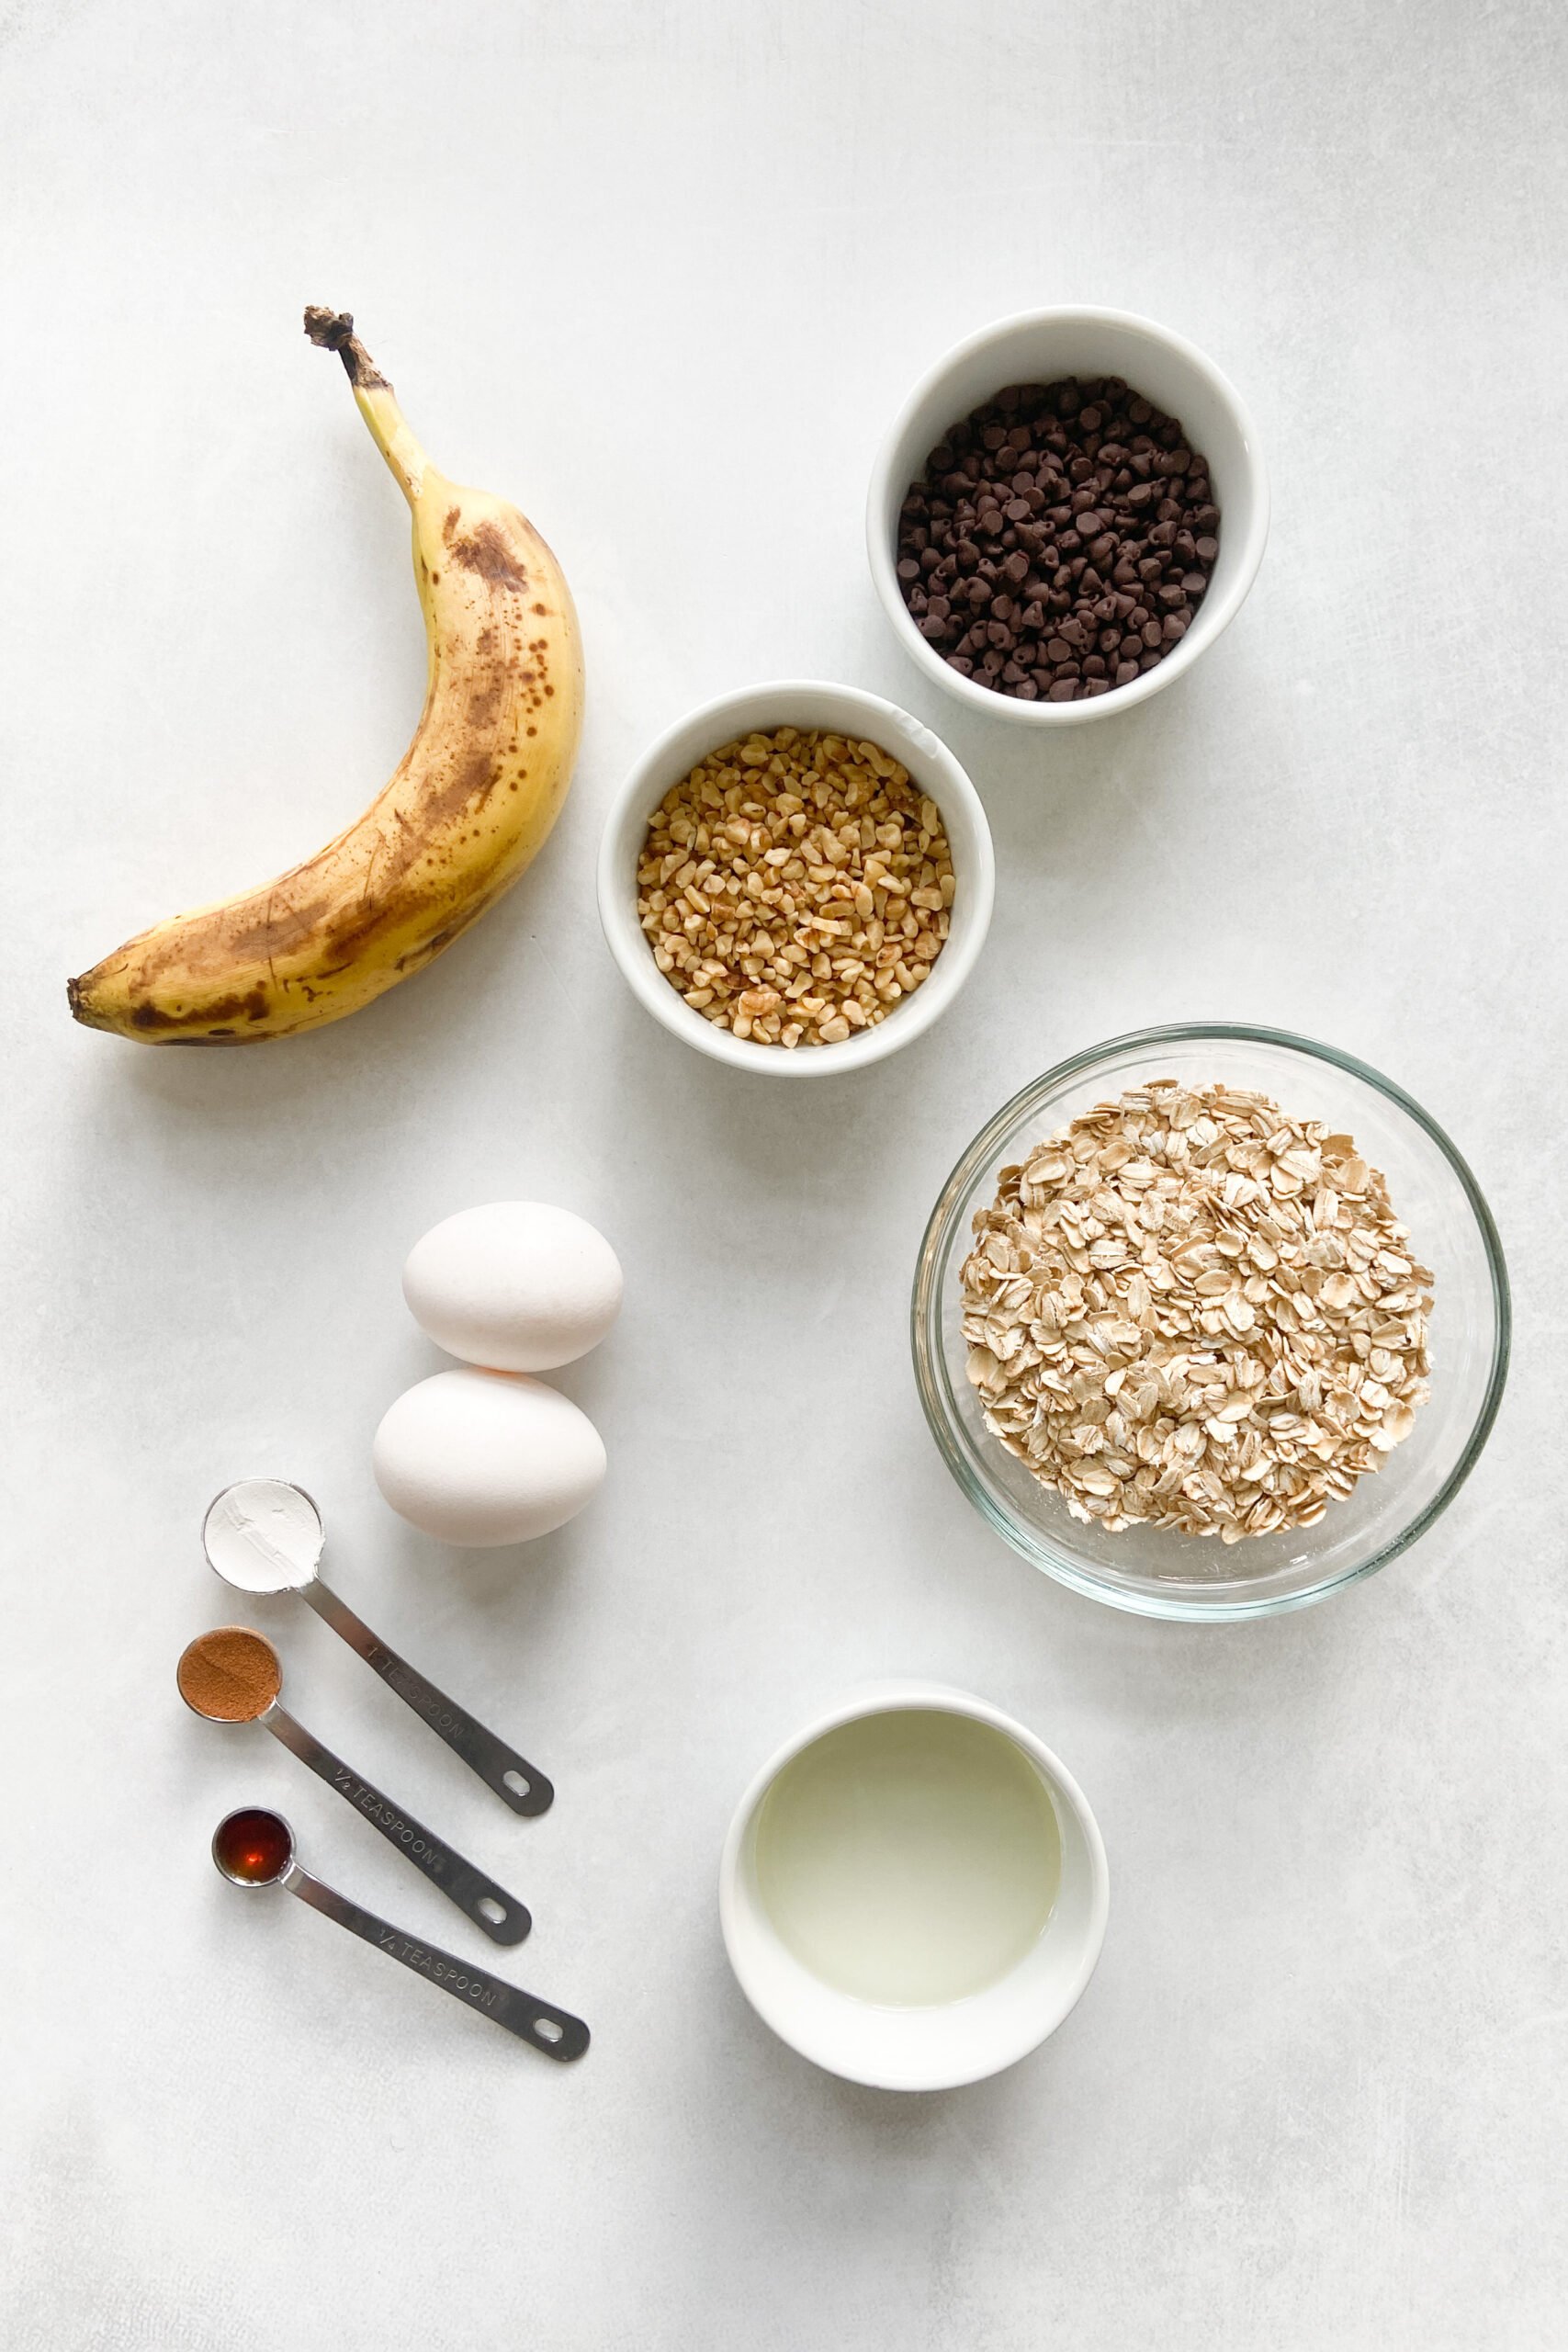 Ingredients to make banana oat waffles